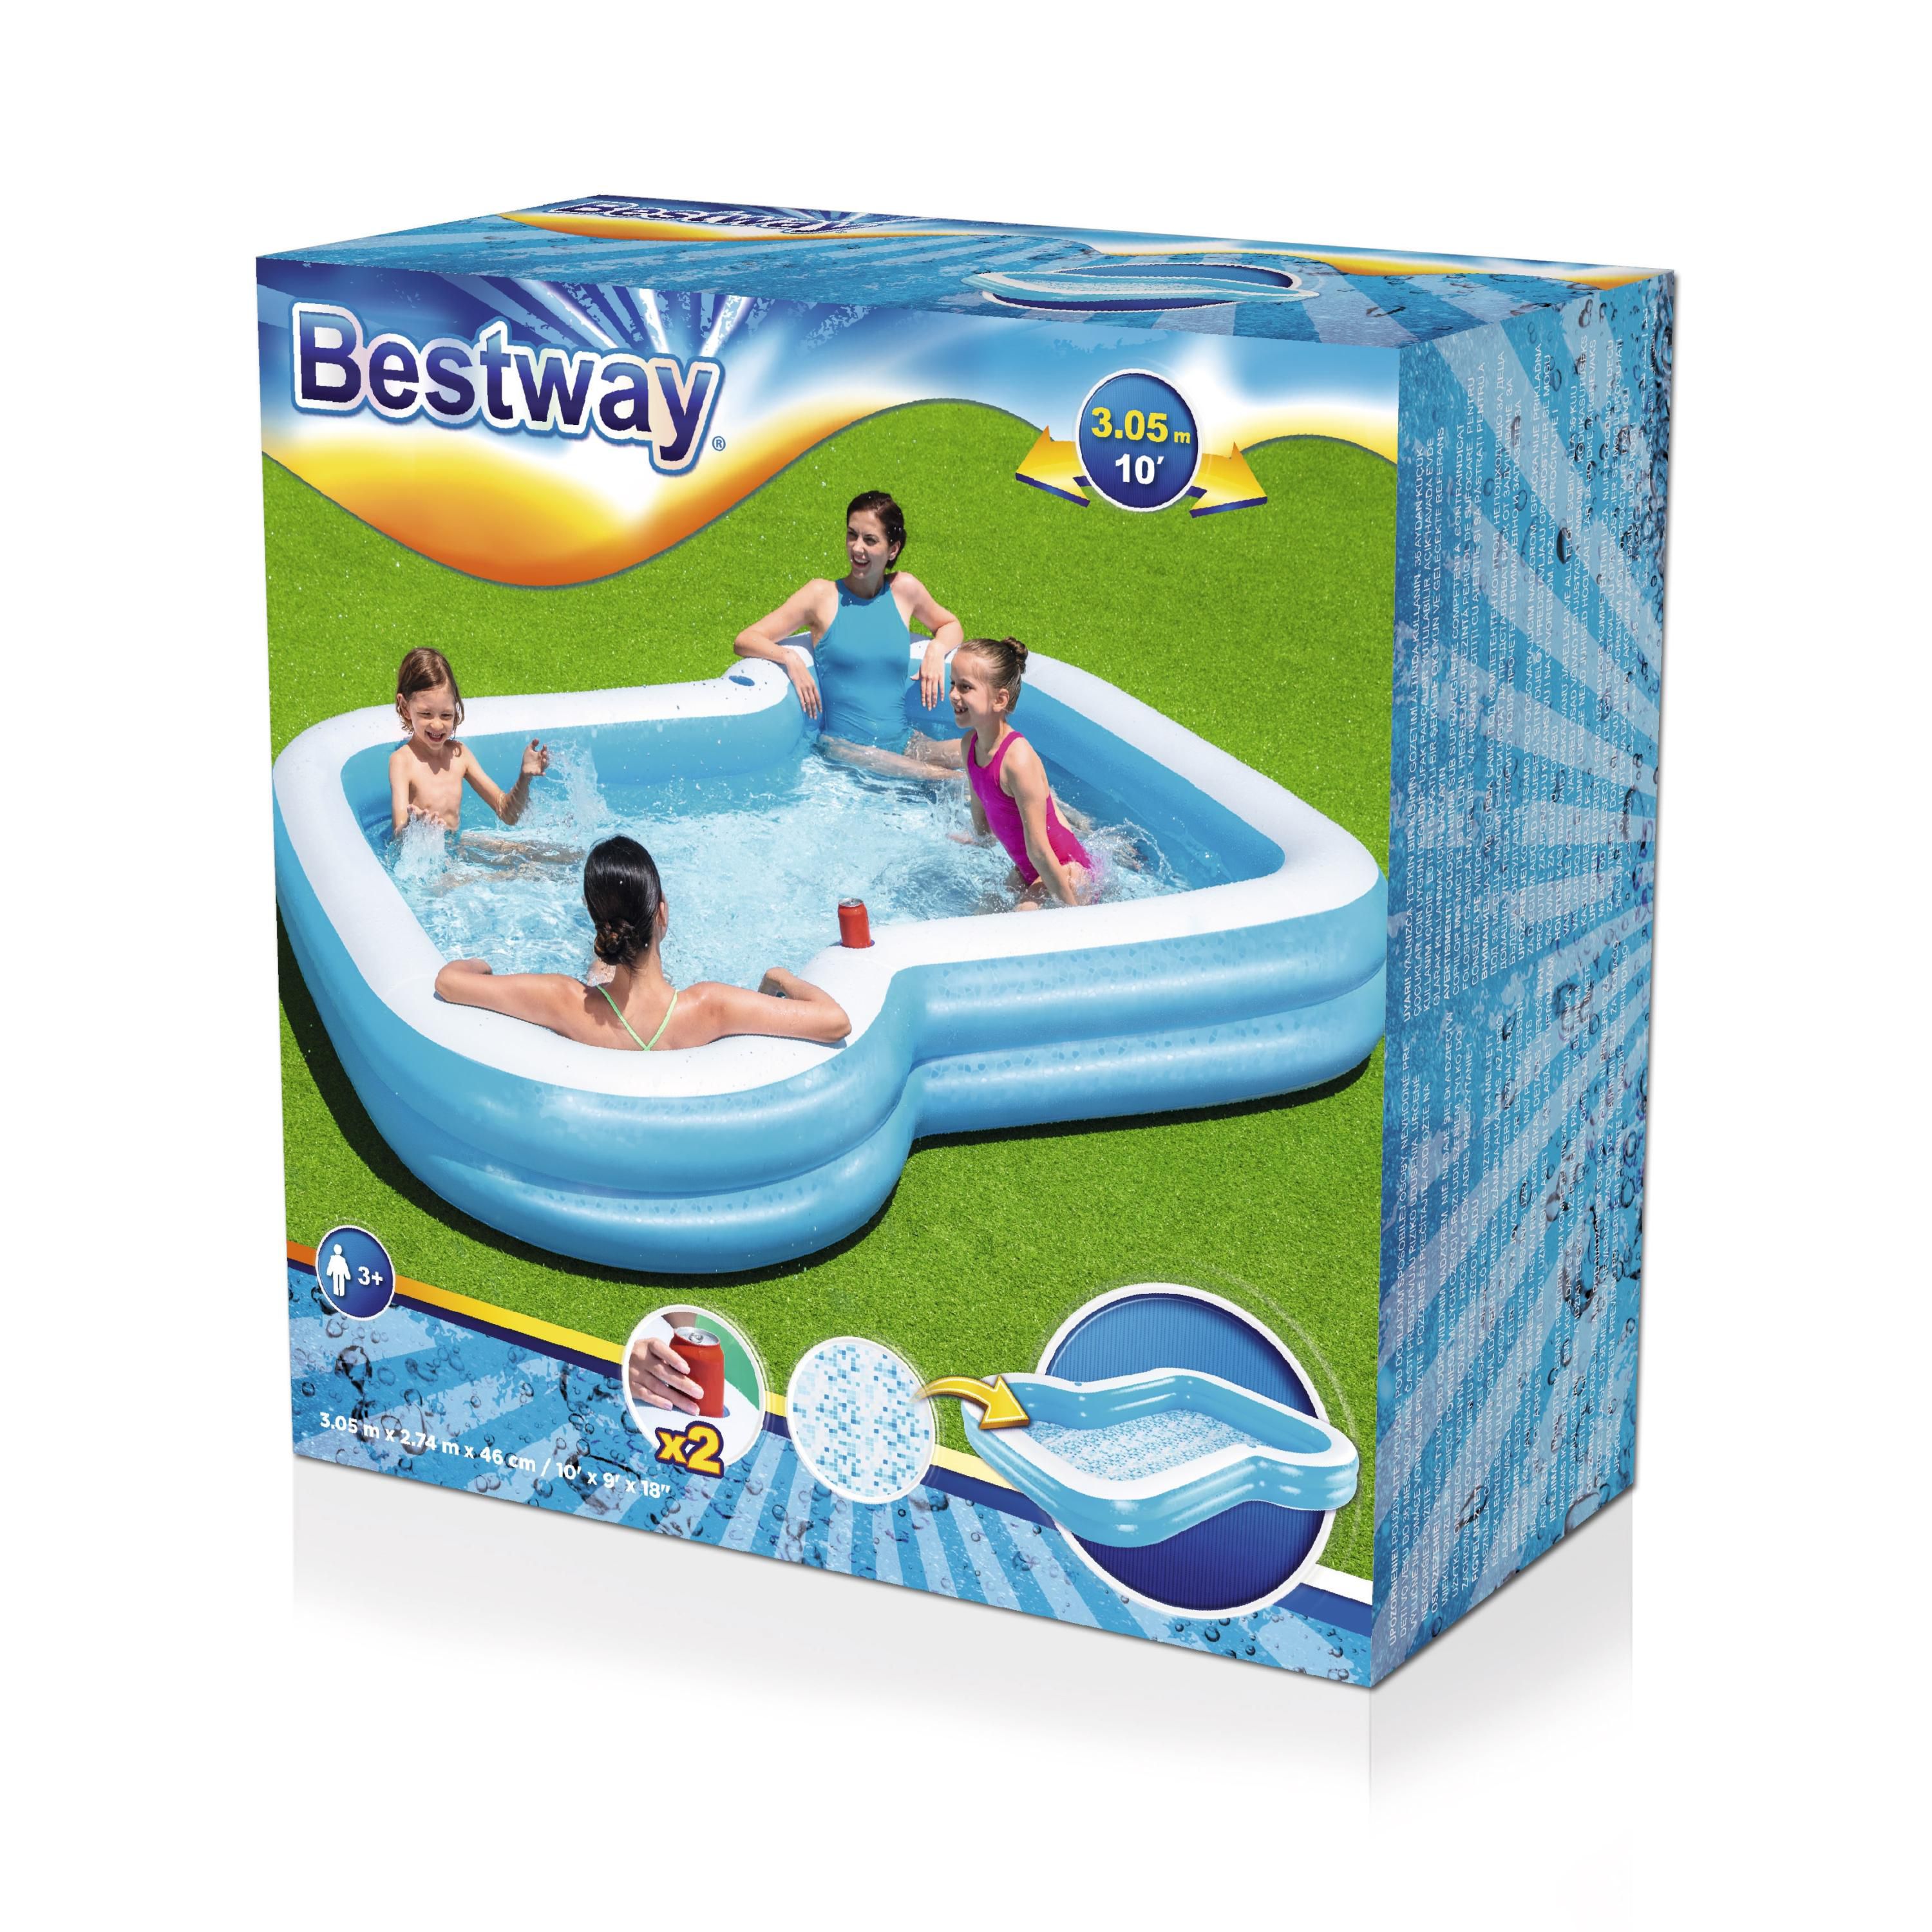 Bestway Sunsational Family fun pool (W) 3.05m x (L) 3.05m